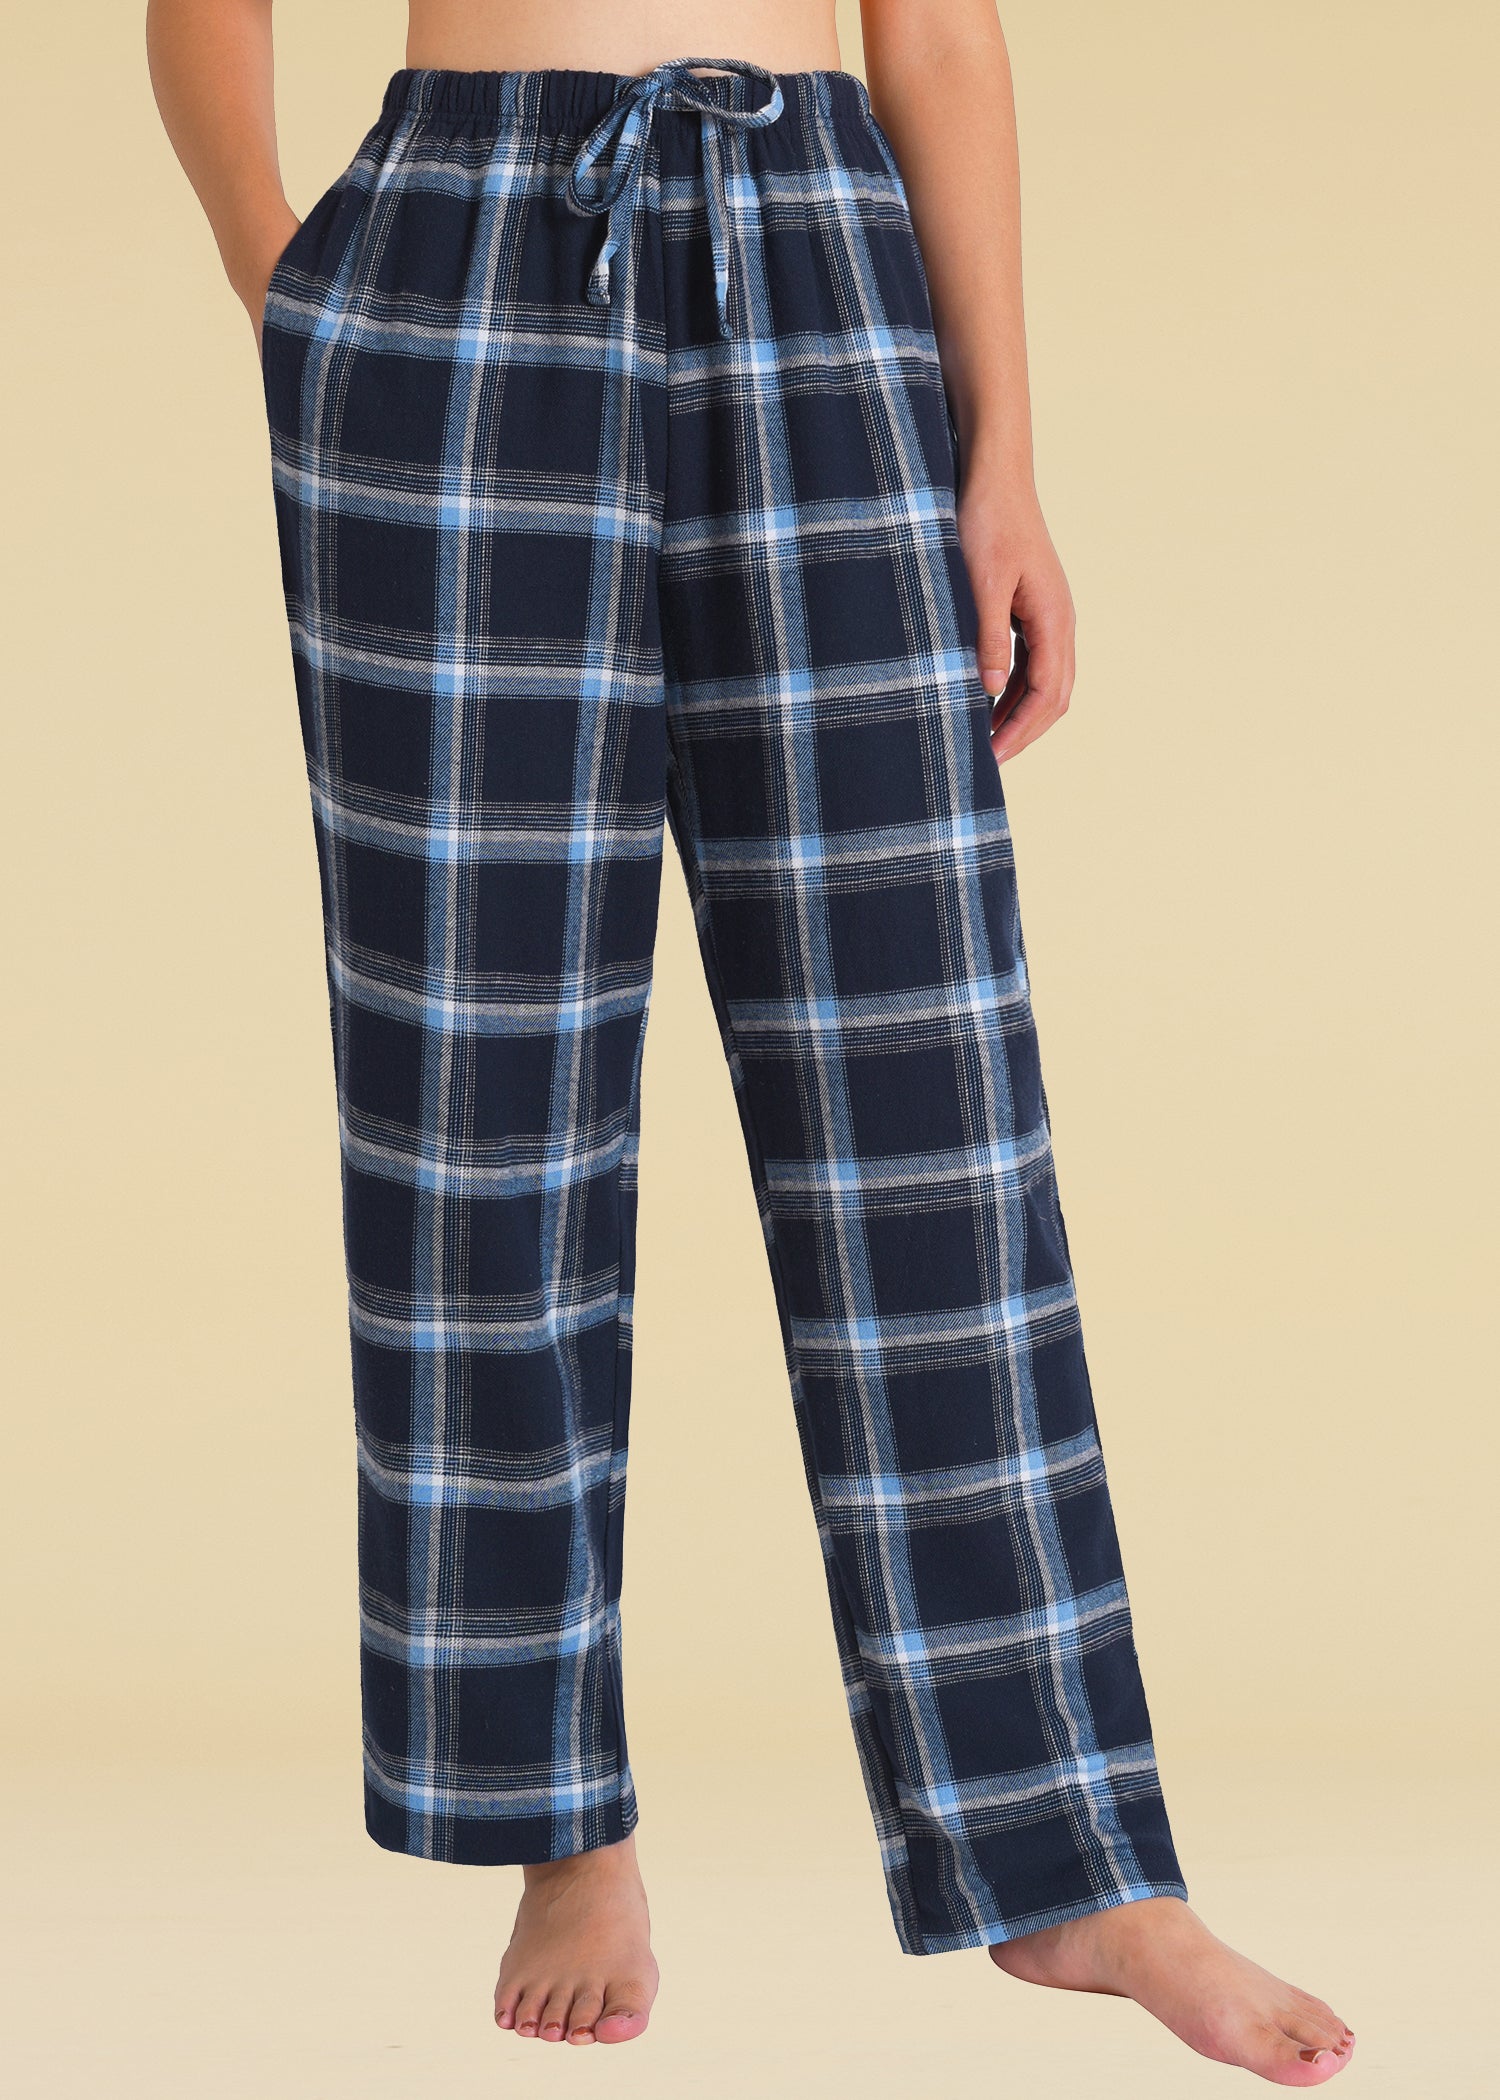 Women's Cotton Flannel Pajama Pants Plaid Pj Bottoms with Pockets – Latuza